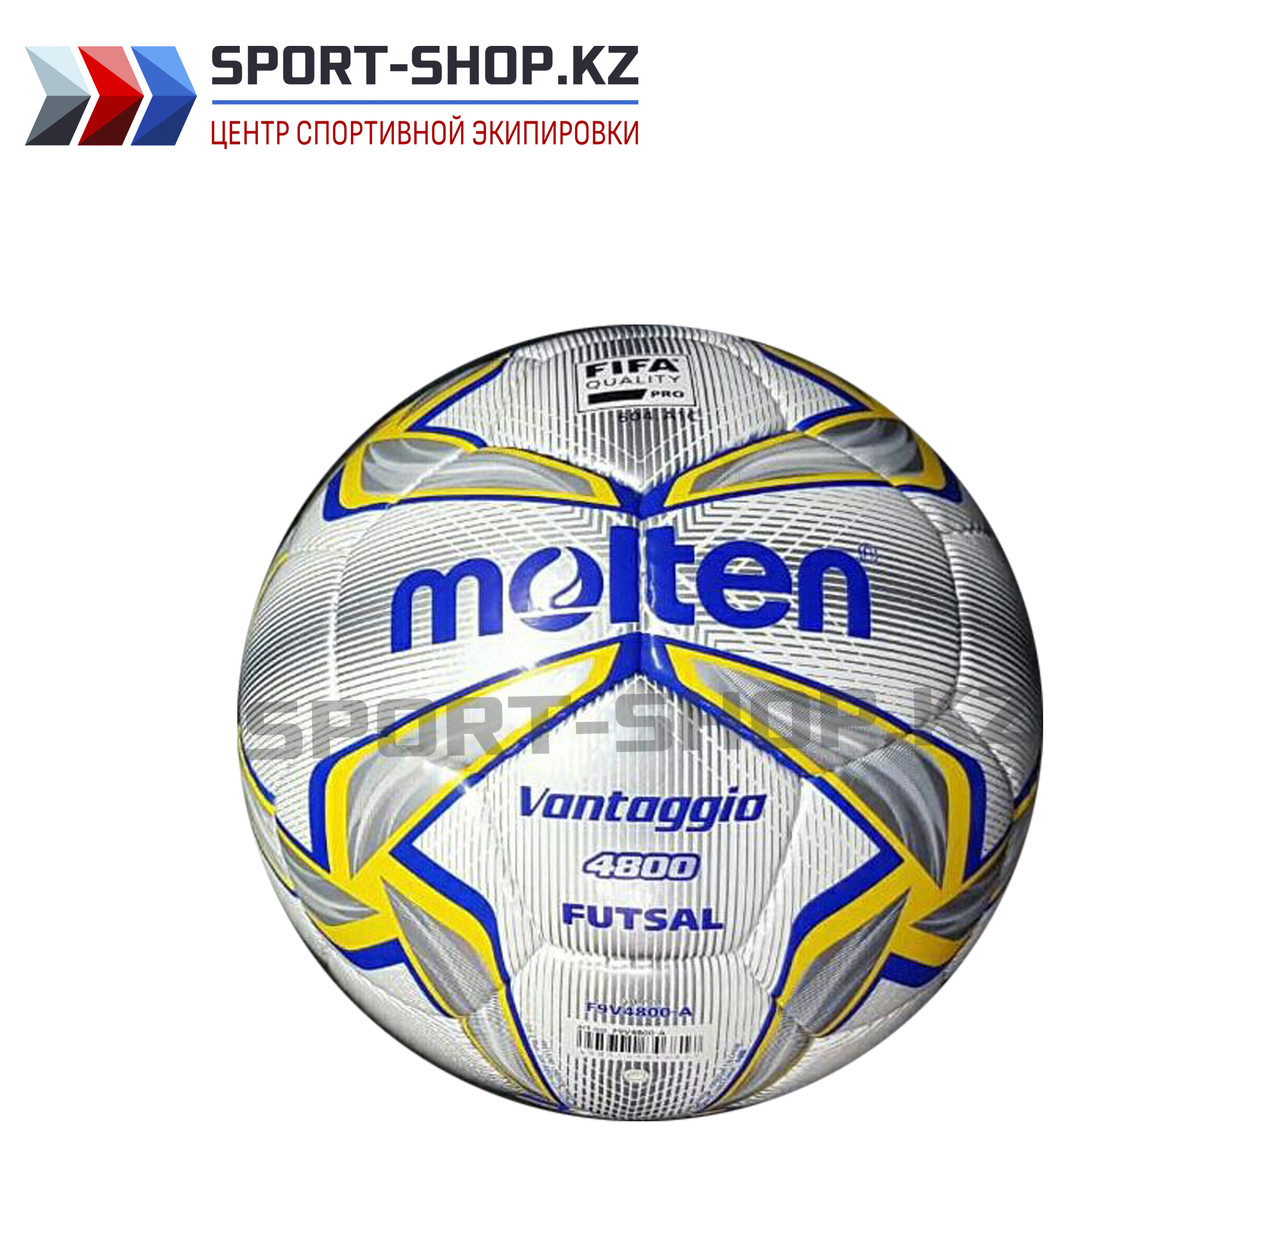 Футбольный мяч  Molten Vantaggio 4800 Futsal